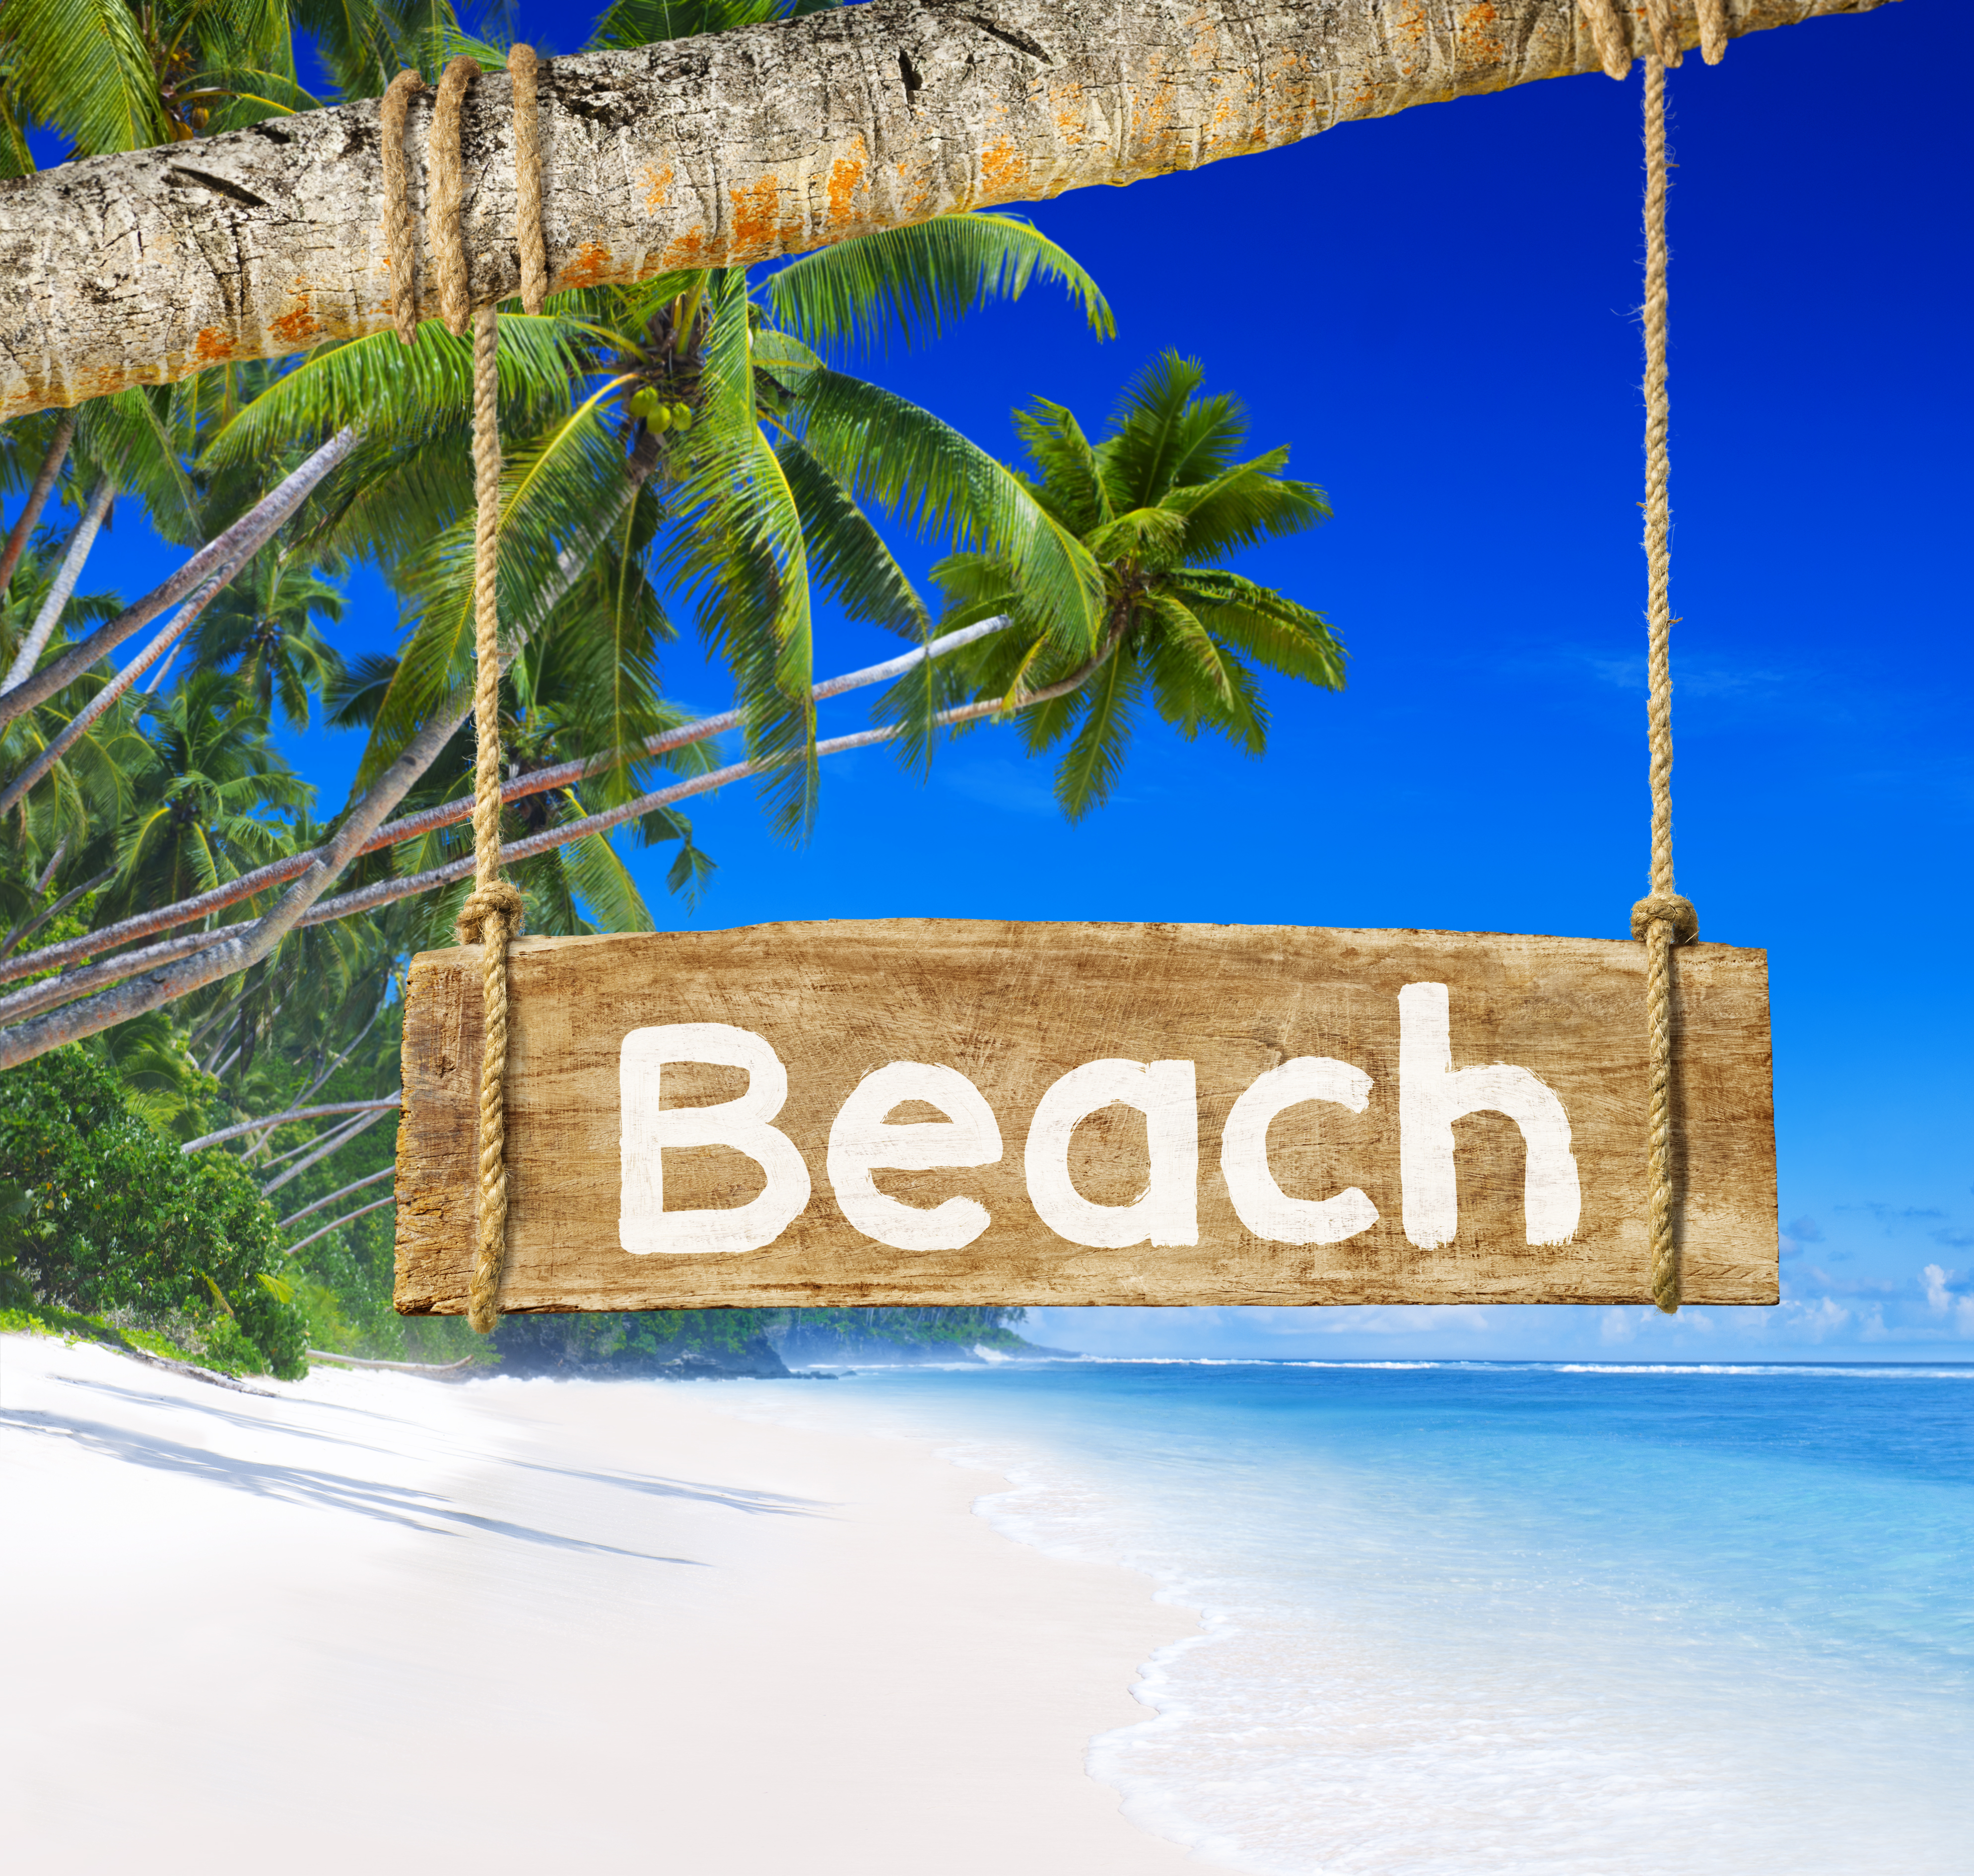 "Beach" banner